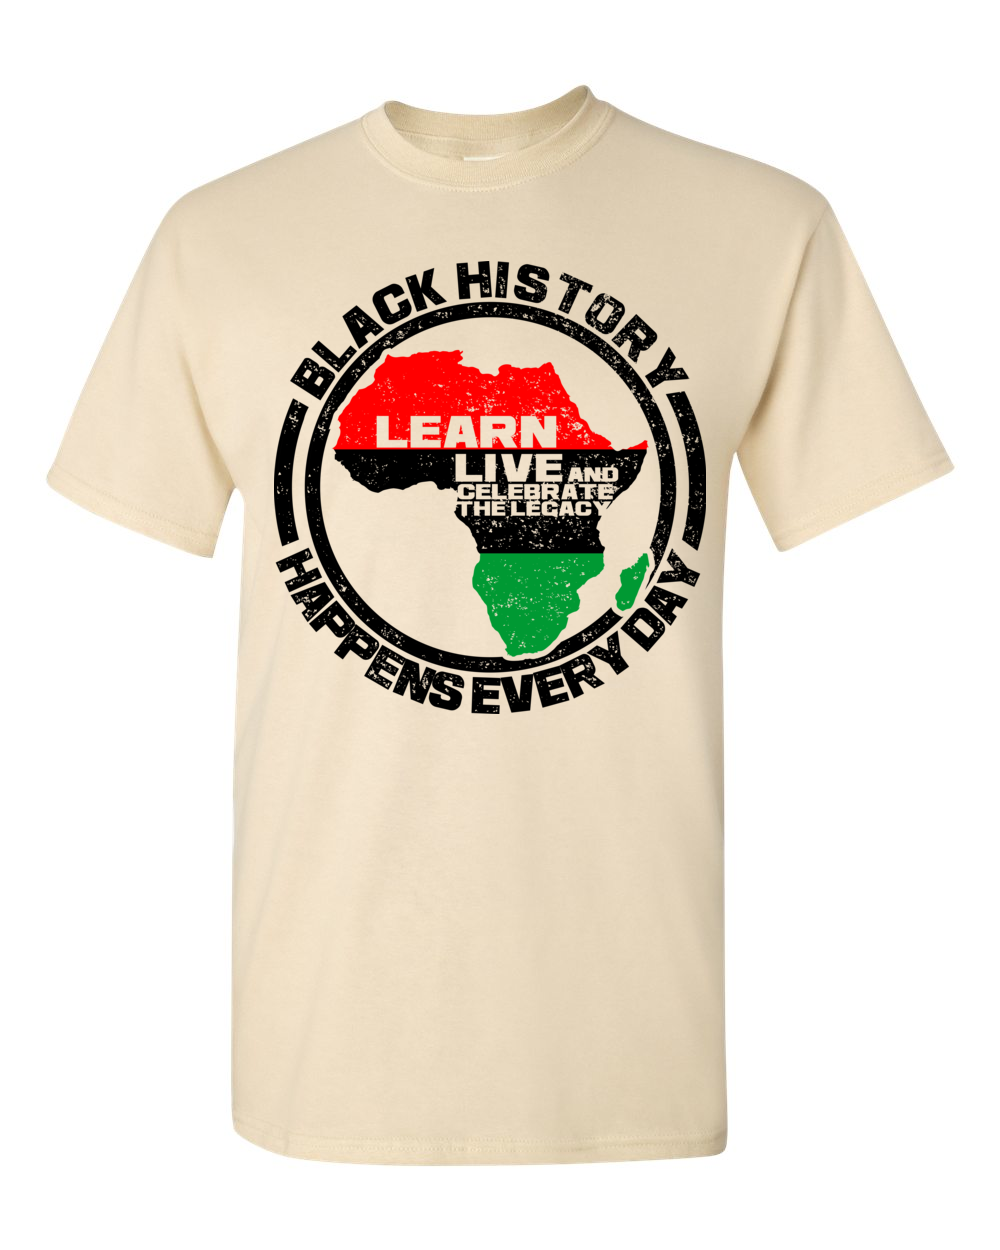 Black History Happens Everyday Short Sleeve Unisex T-Shirt-T-Shirt-RBG Forever-Small-Natural-The Black Art Depot